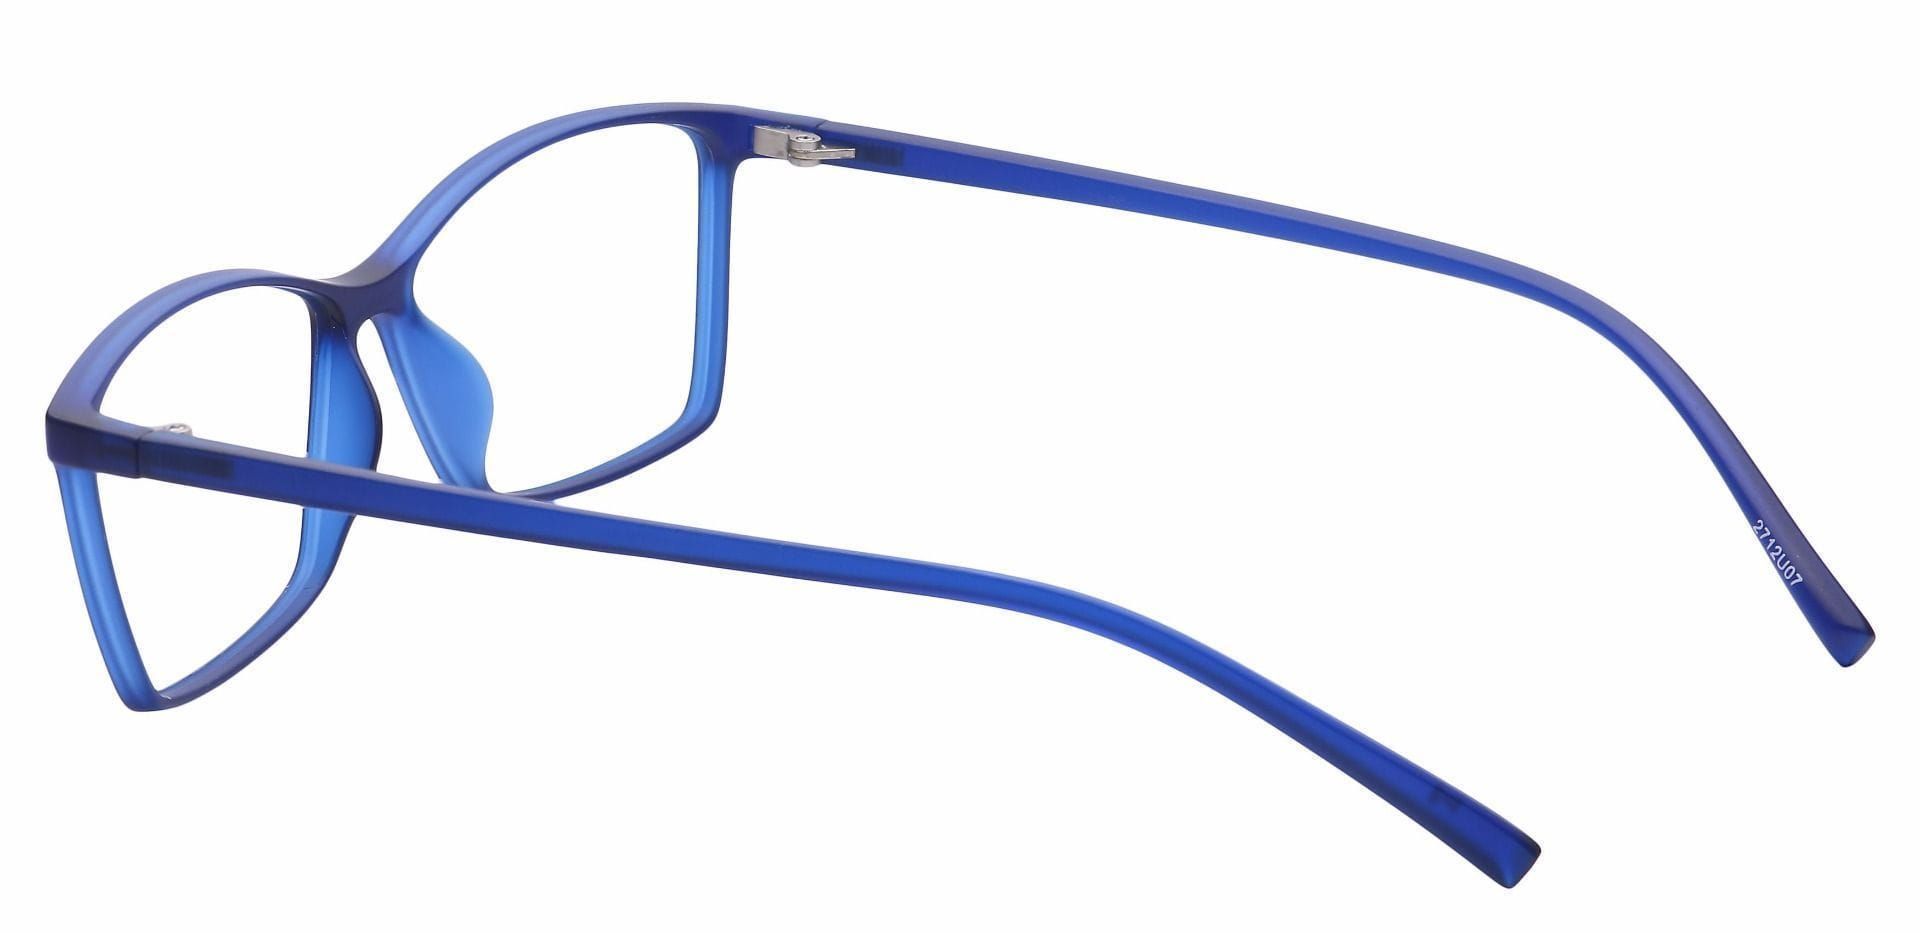 Align Rectangle Progressive Glasses - Blue